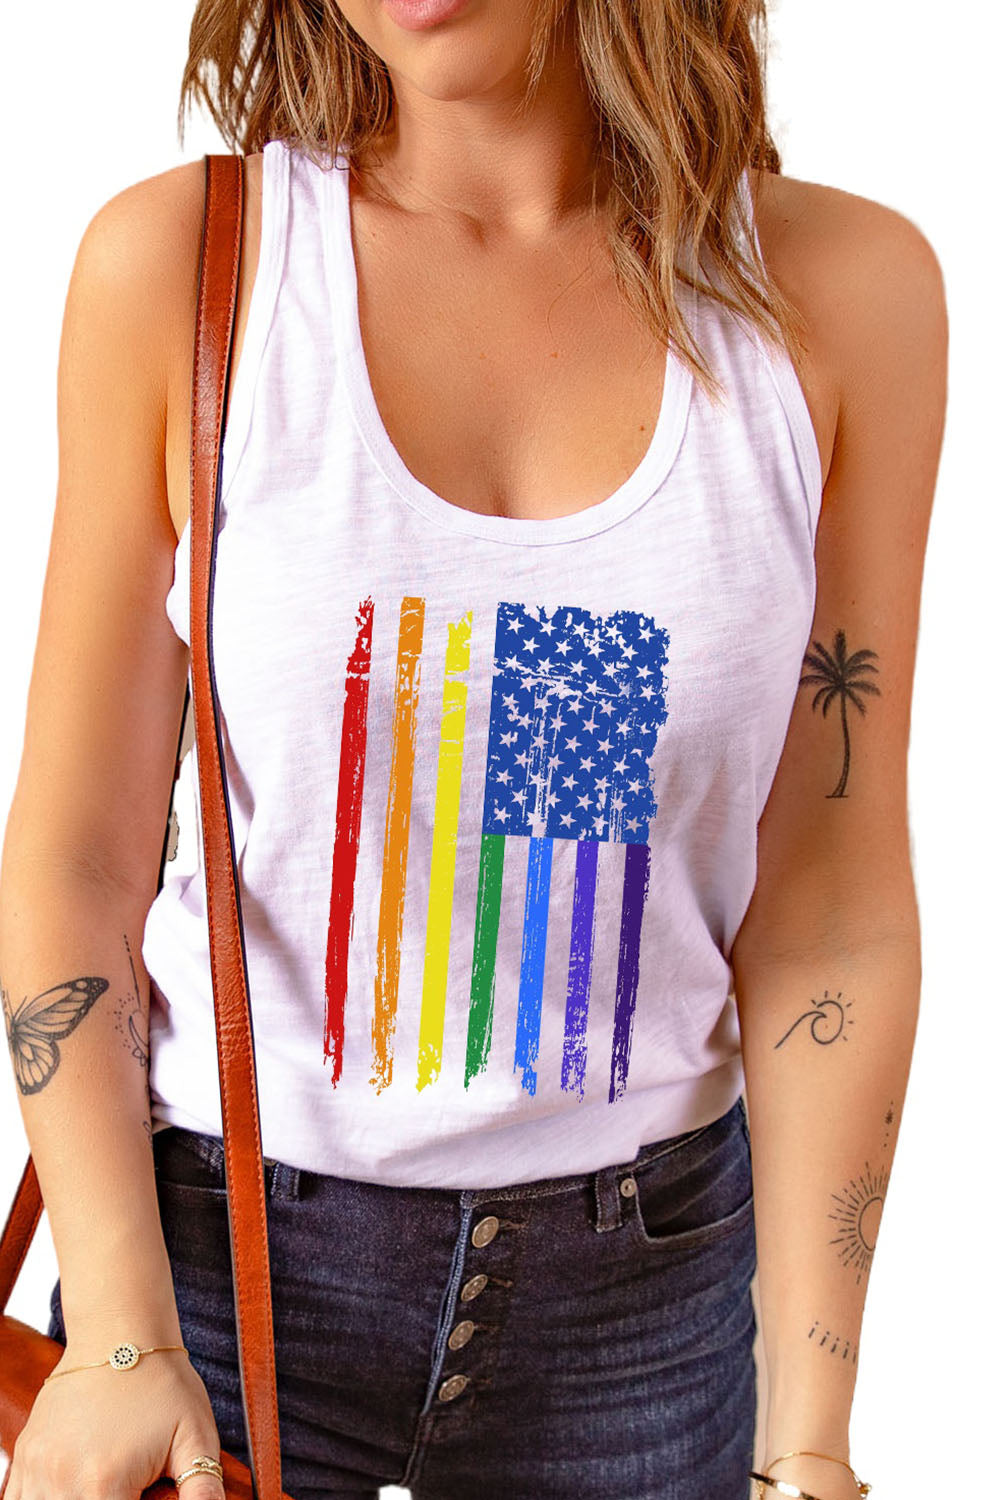 LC2566532-1-S, LC2566532-1-M, LC2566532-1-L, LC2566532-1-XL, LC2566532-1-2XL, White Women's Vintage Rainbow Flag Print Workout Tank Top LGBTQ Gifts